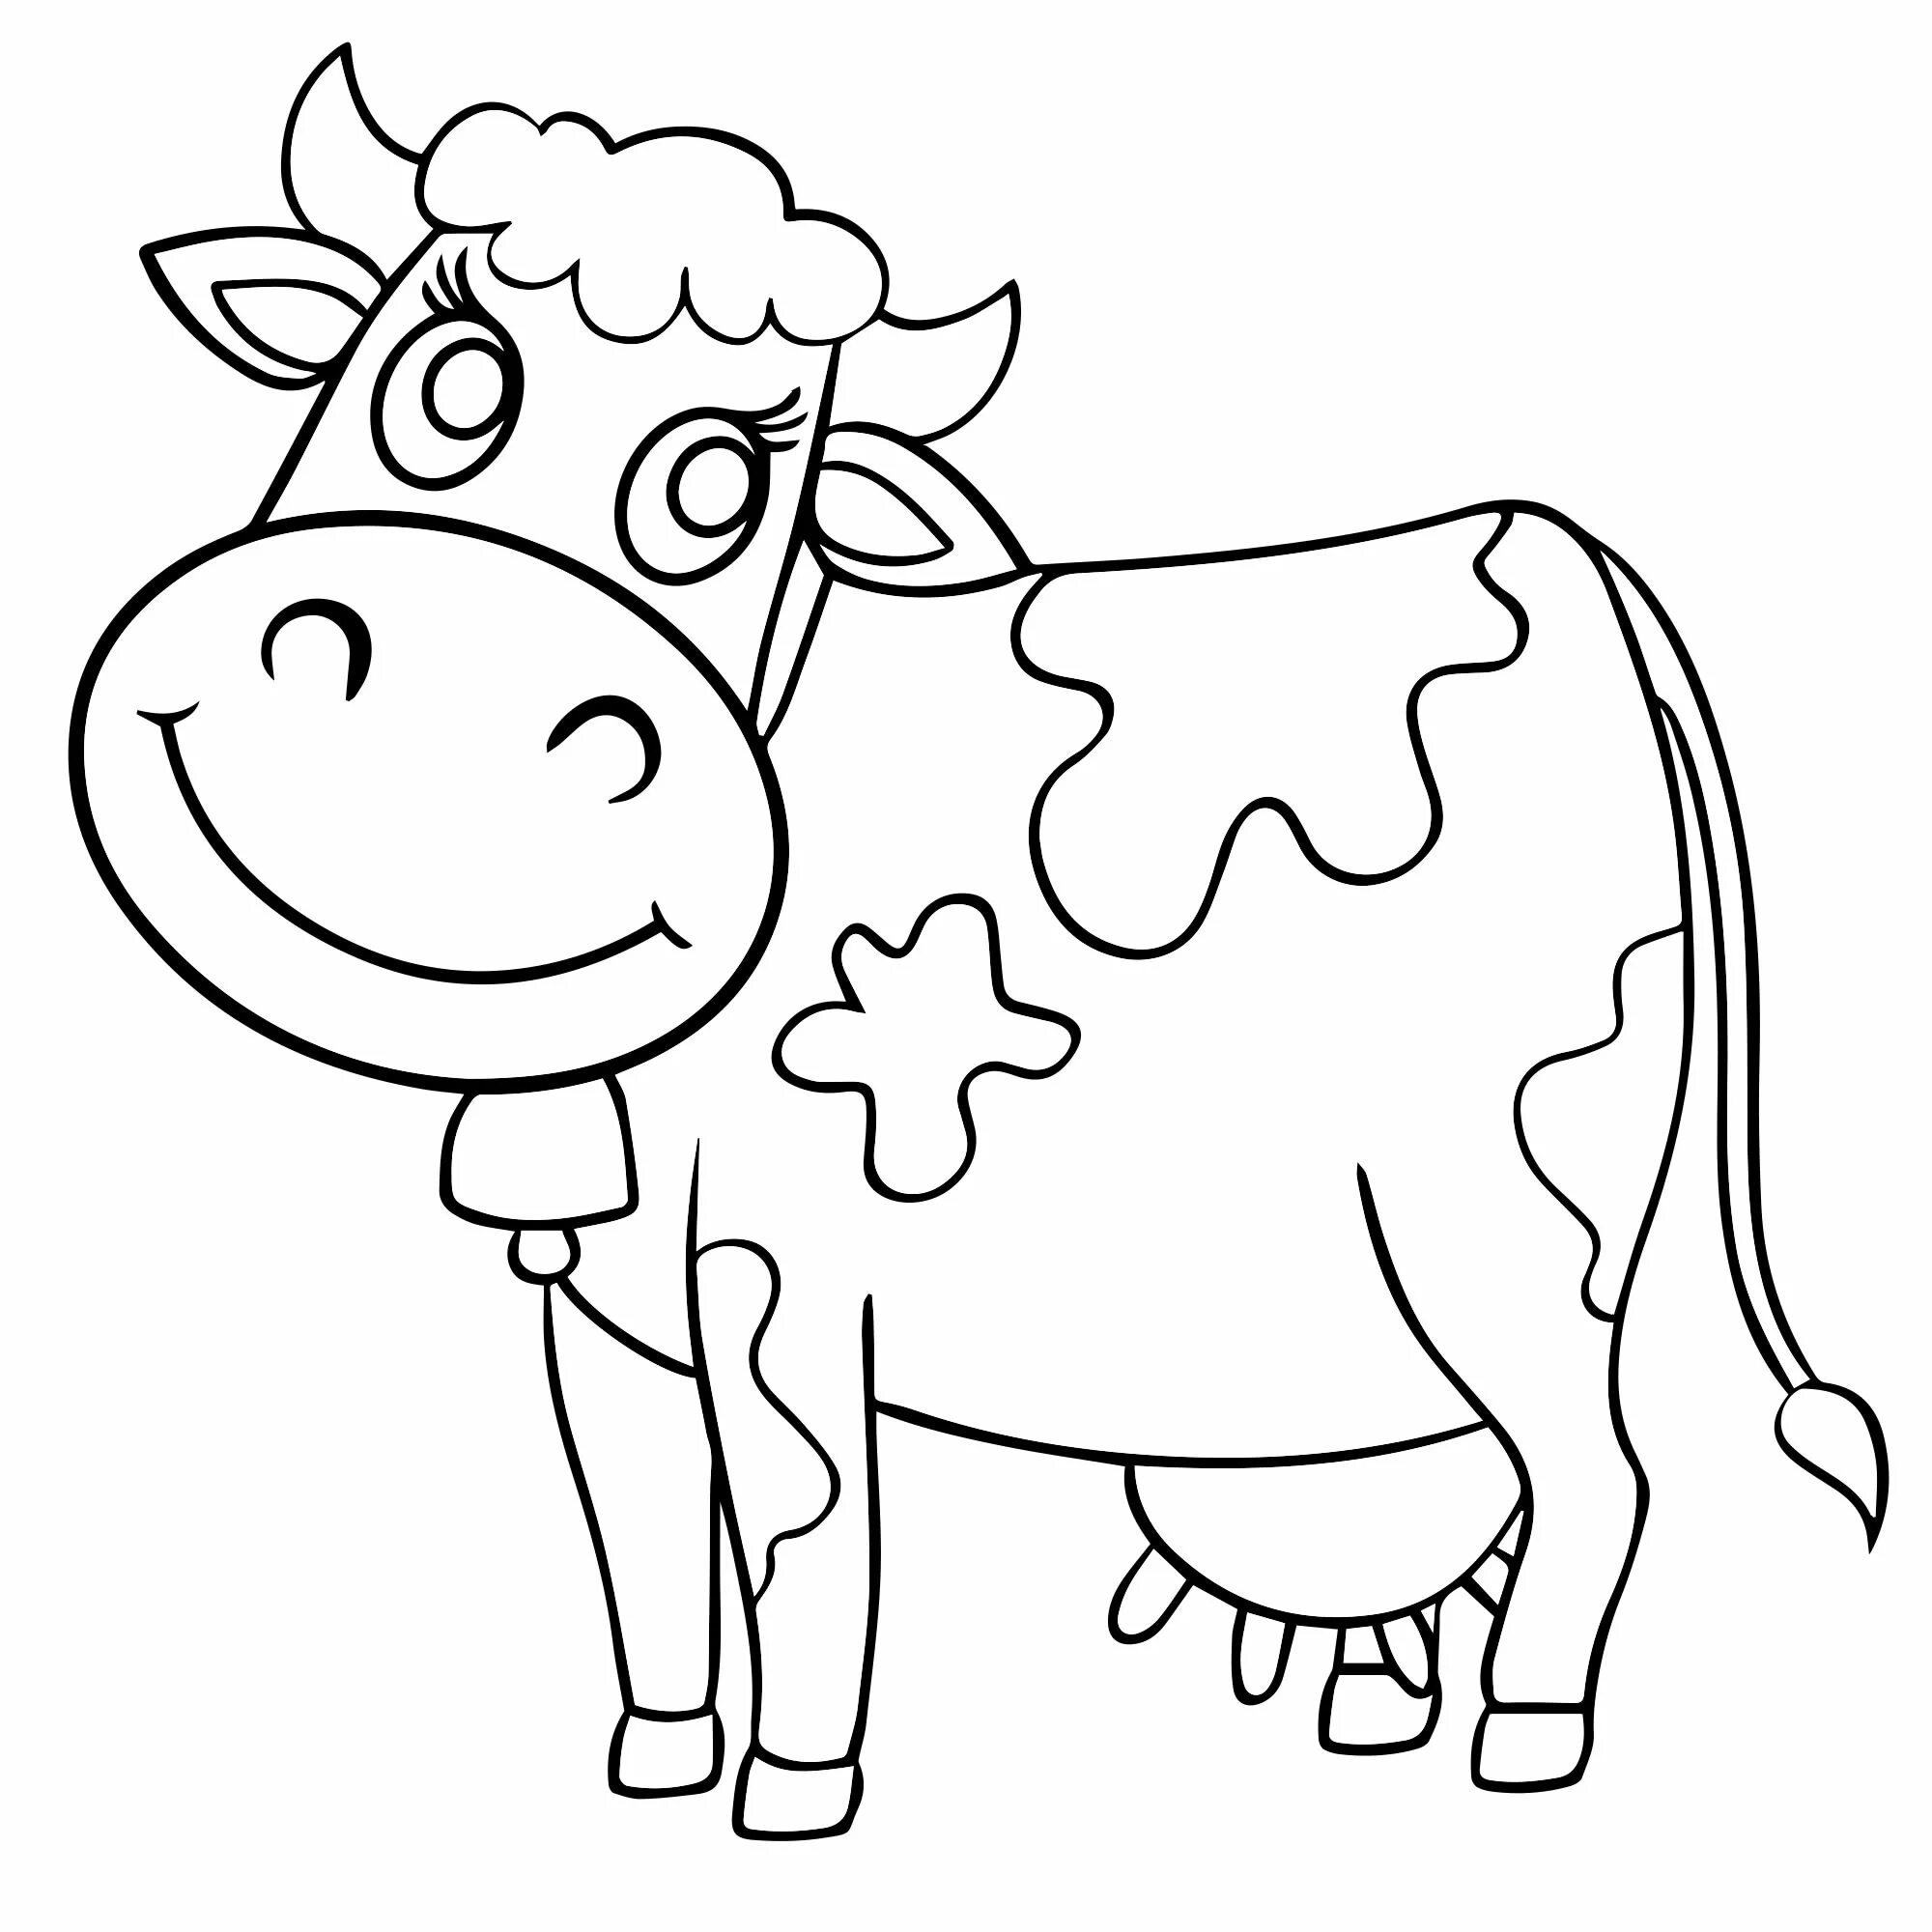 Раскраска корова. Корова раскраска для детей. Корова расскраскадля детей. Корова раскраска для малышей.